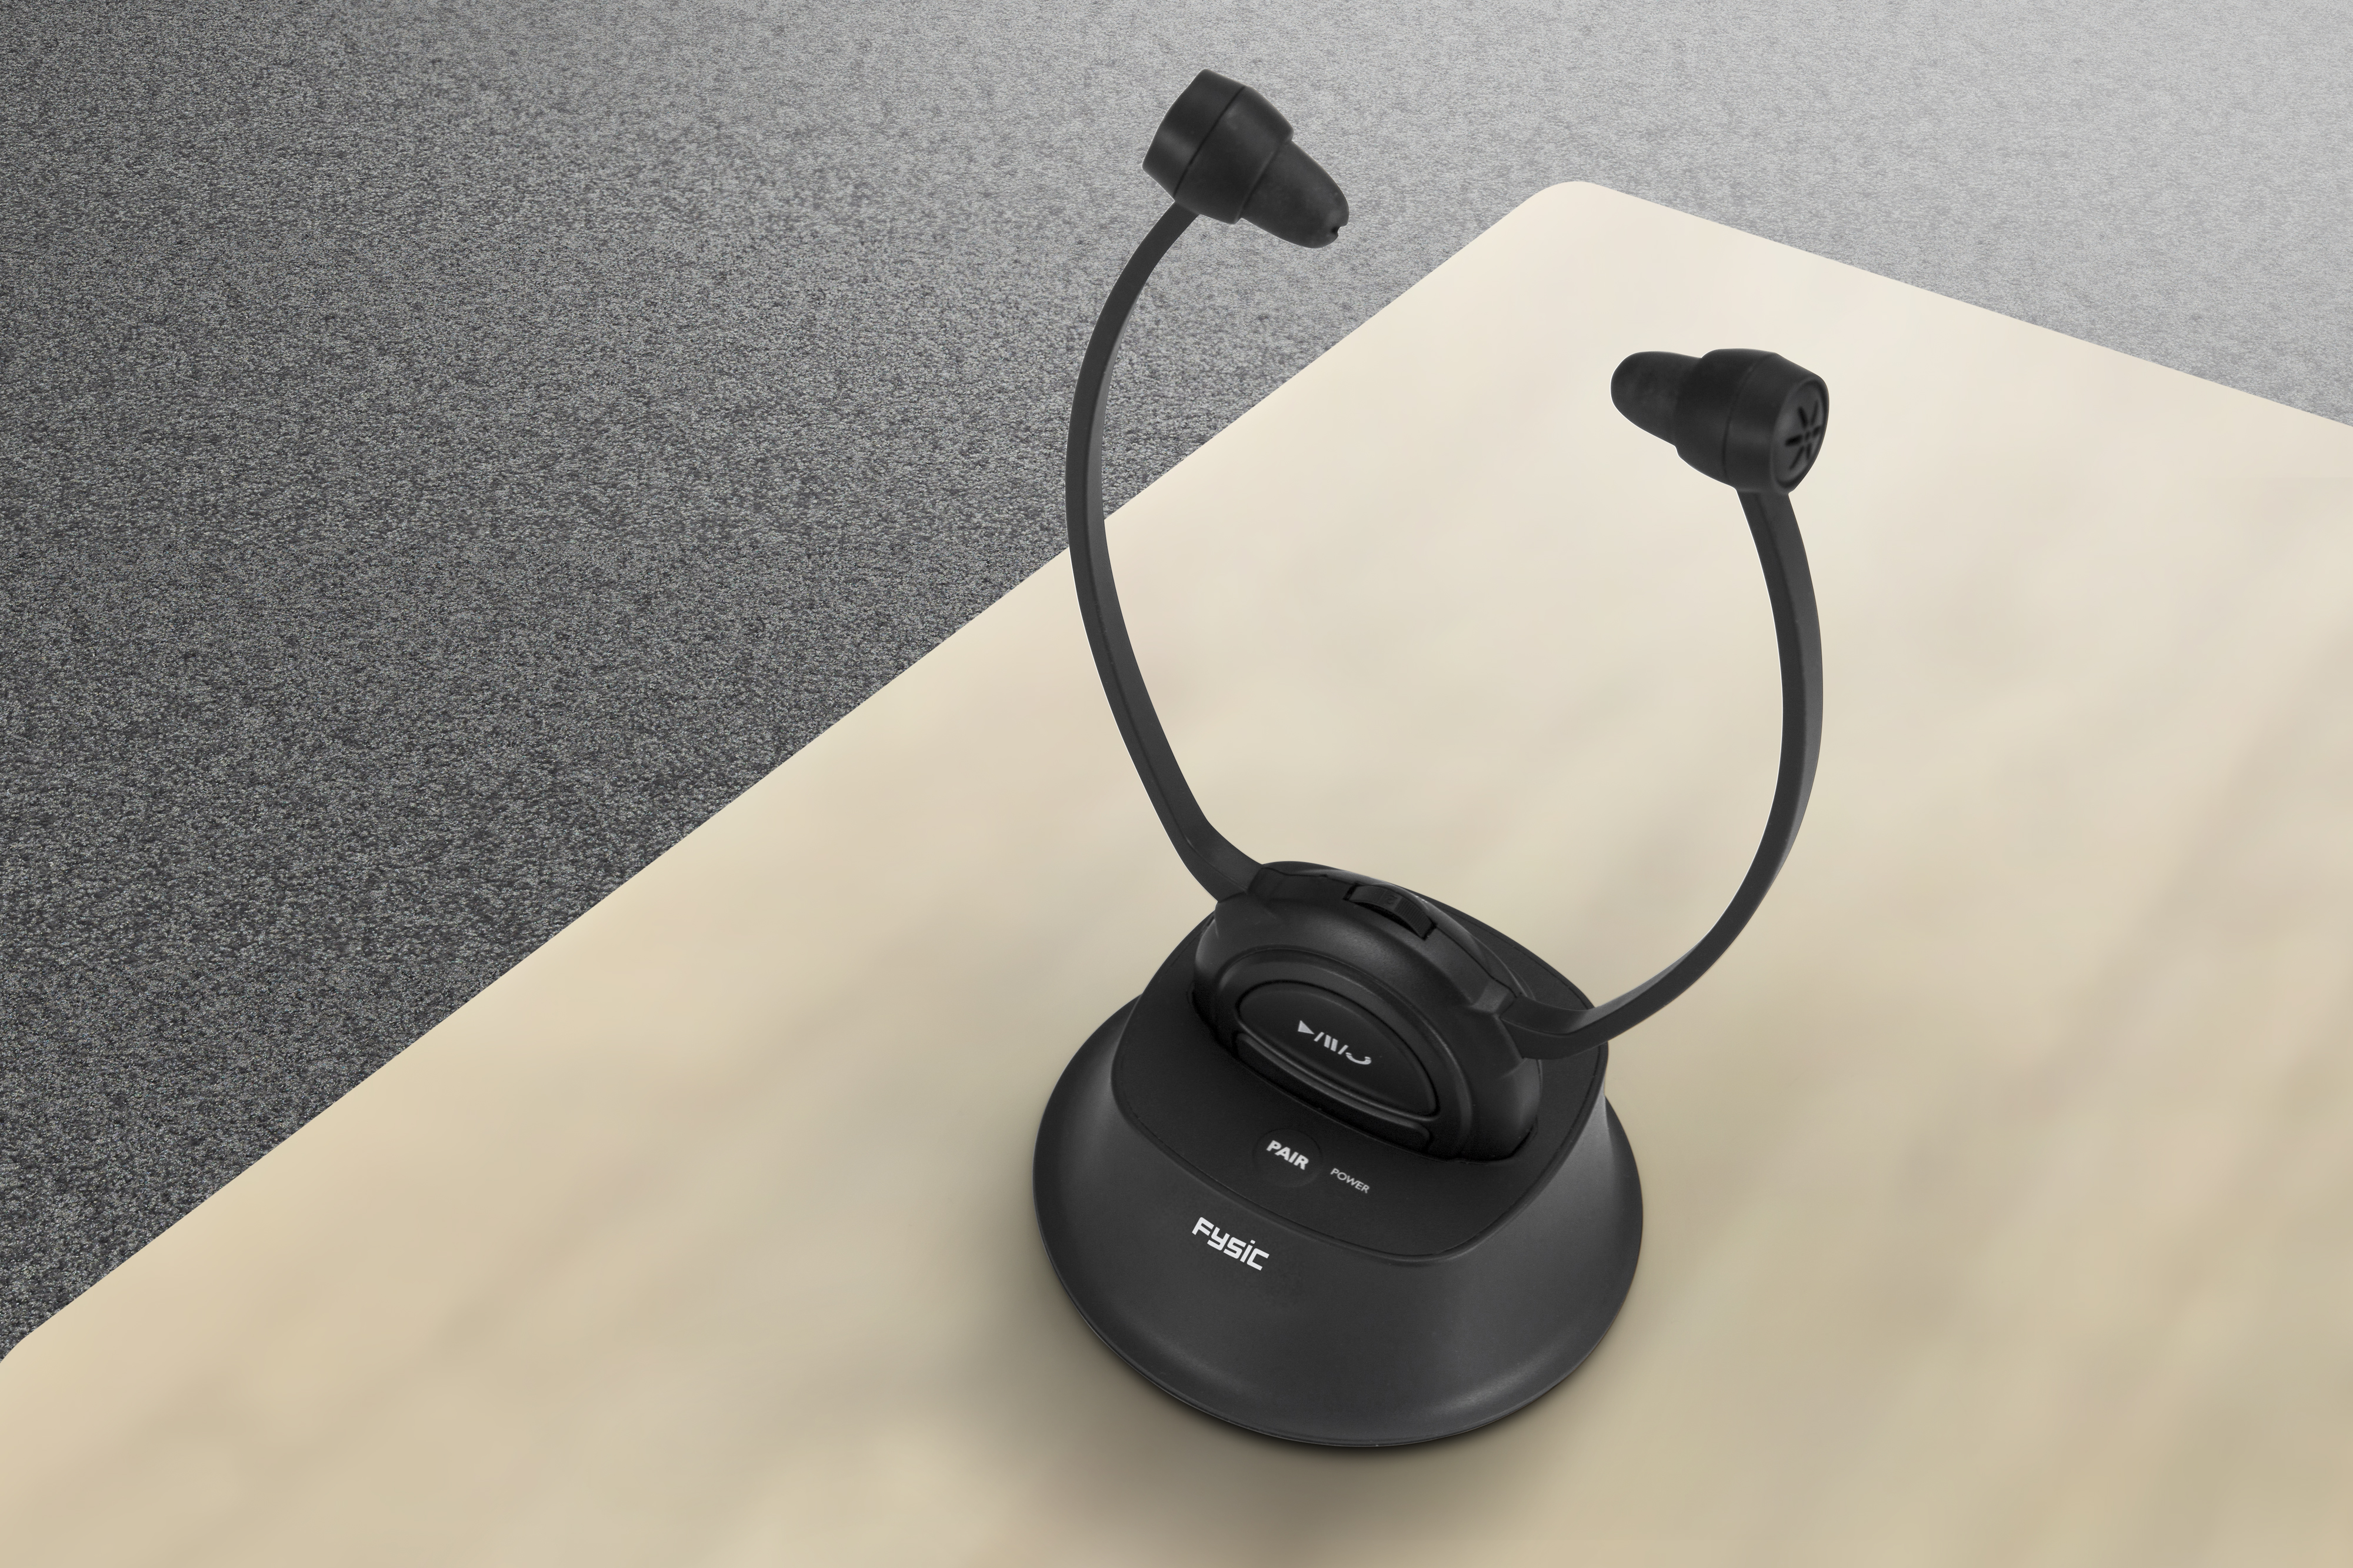 FYSIC FH-76 - Kabelloser Hörverstärker/Kopfhörer -, Schwarz Bluetooth In-ear Kopfhörer